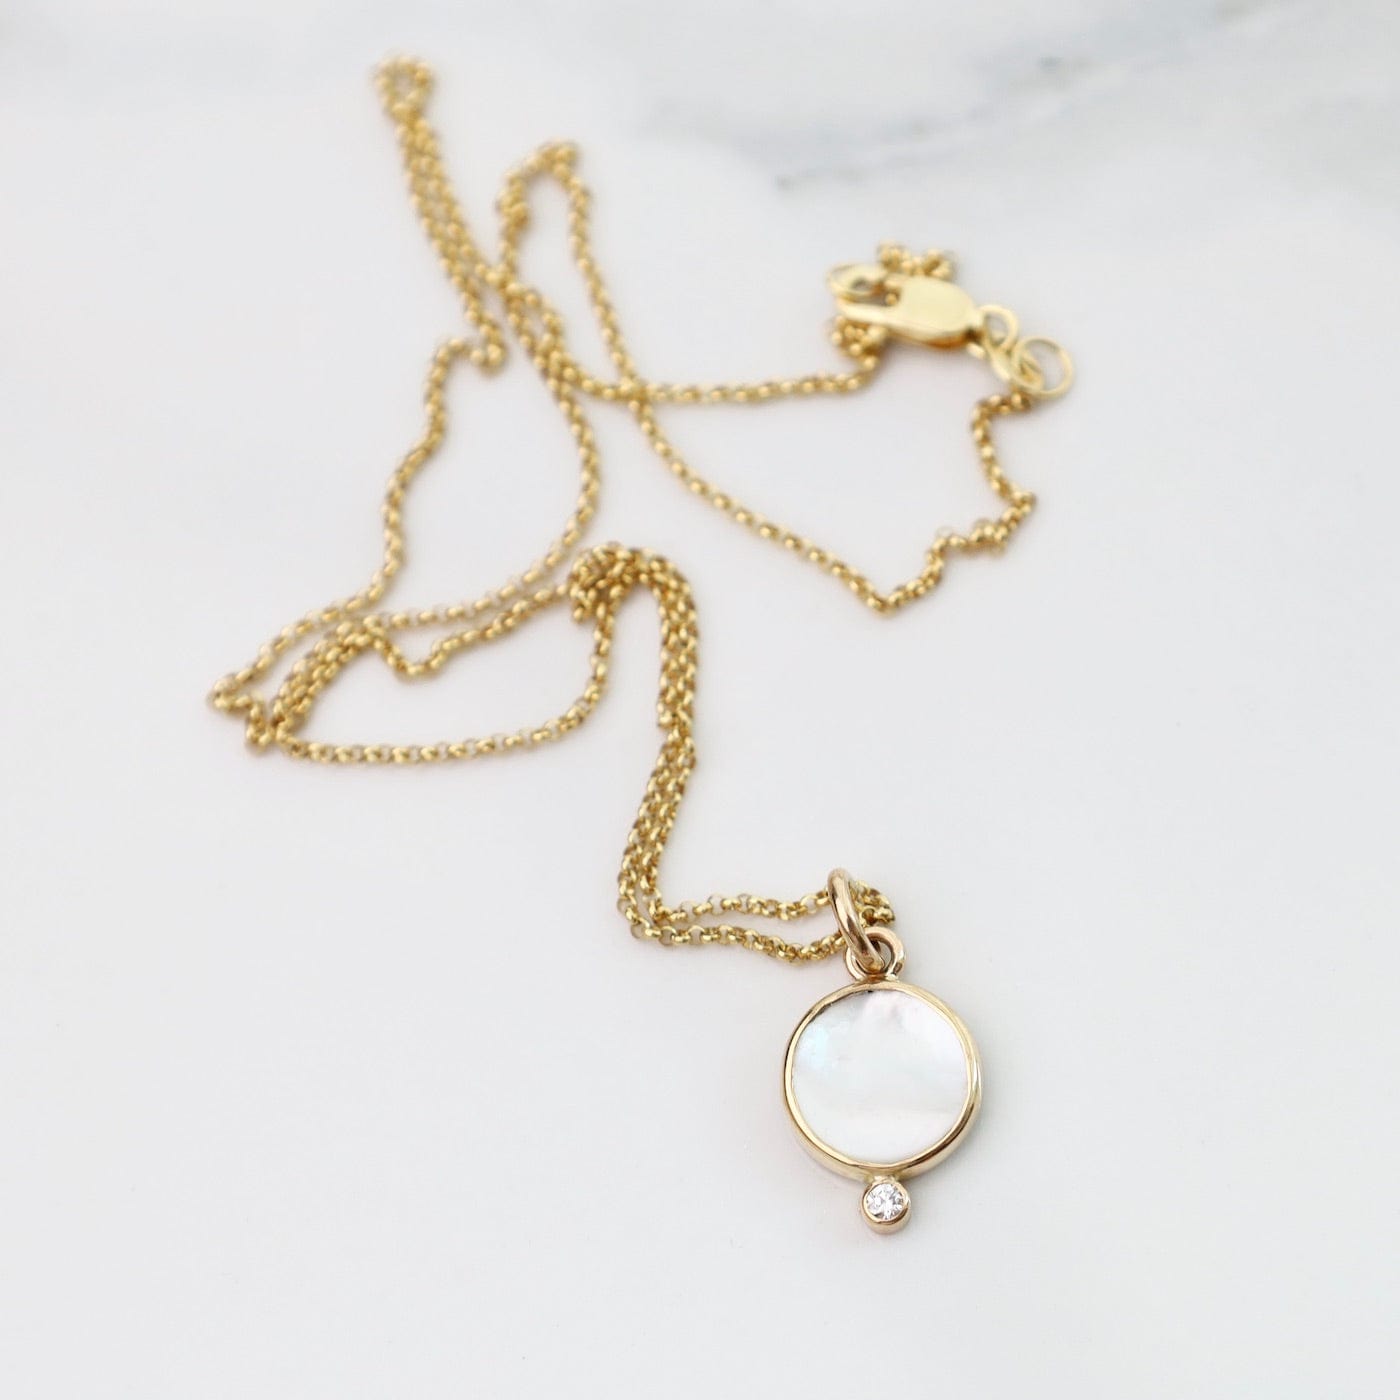 NKL-14K Medallion Necklace - Mother of Pearl & White Diamond